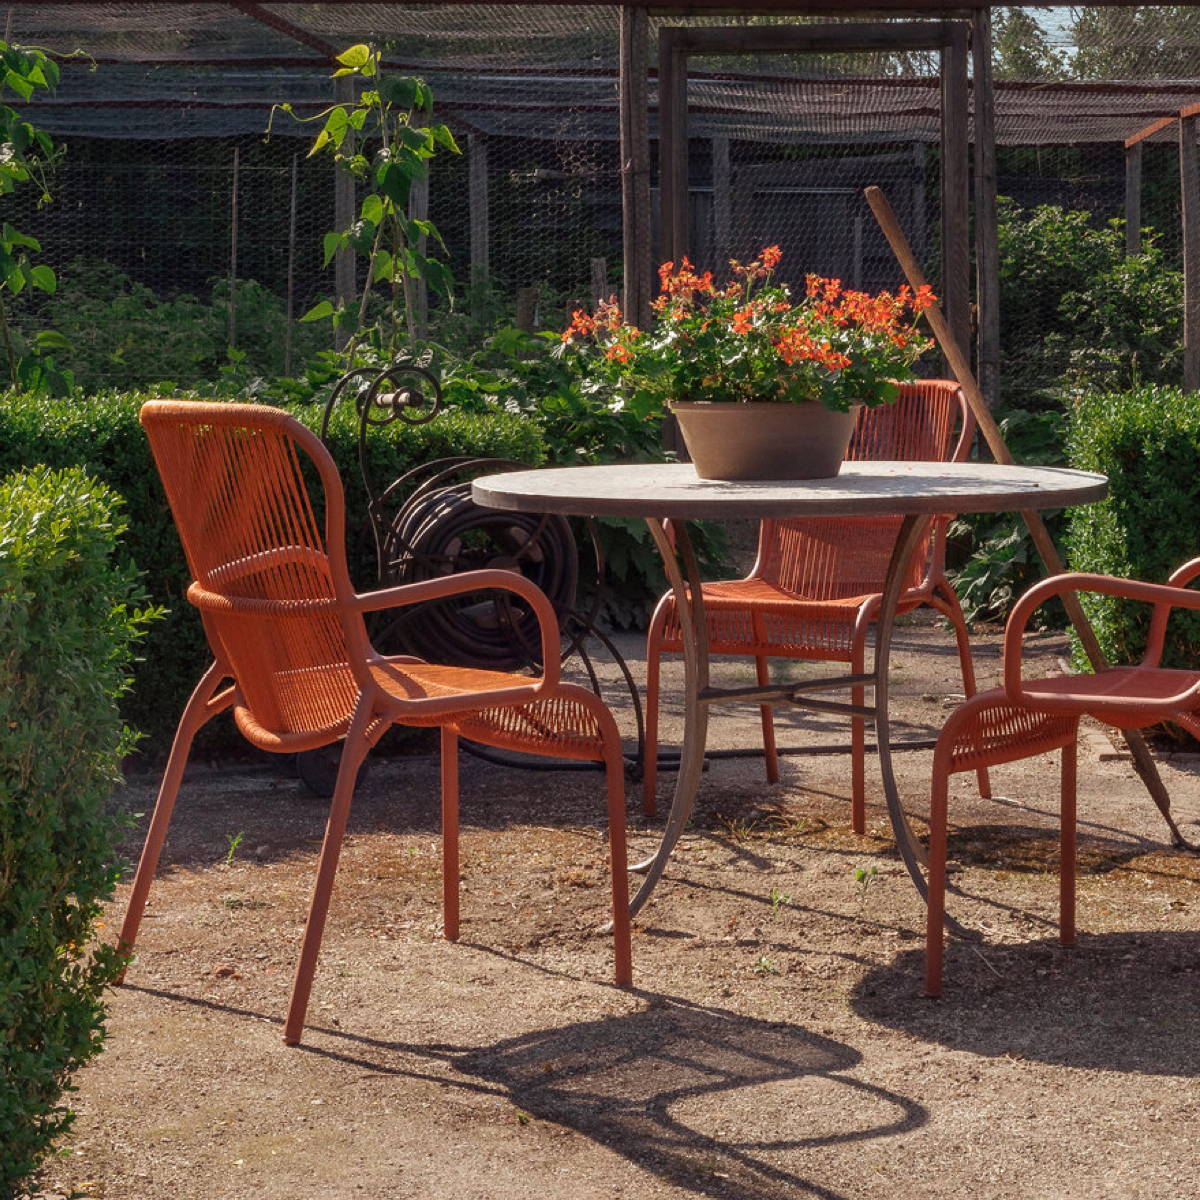 Three orange dining armchairs sit around a garden table laid with orange flowers.